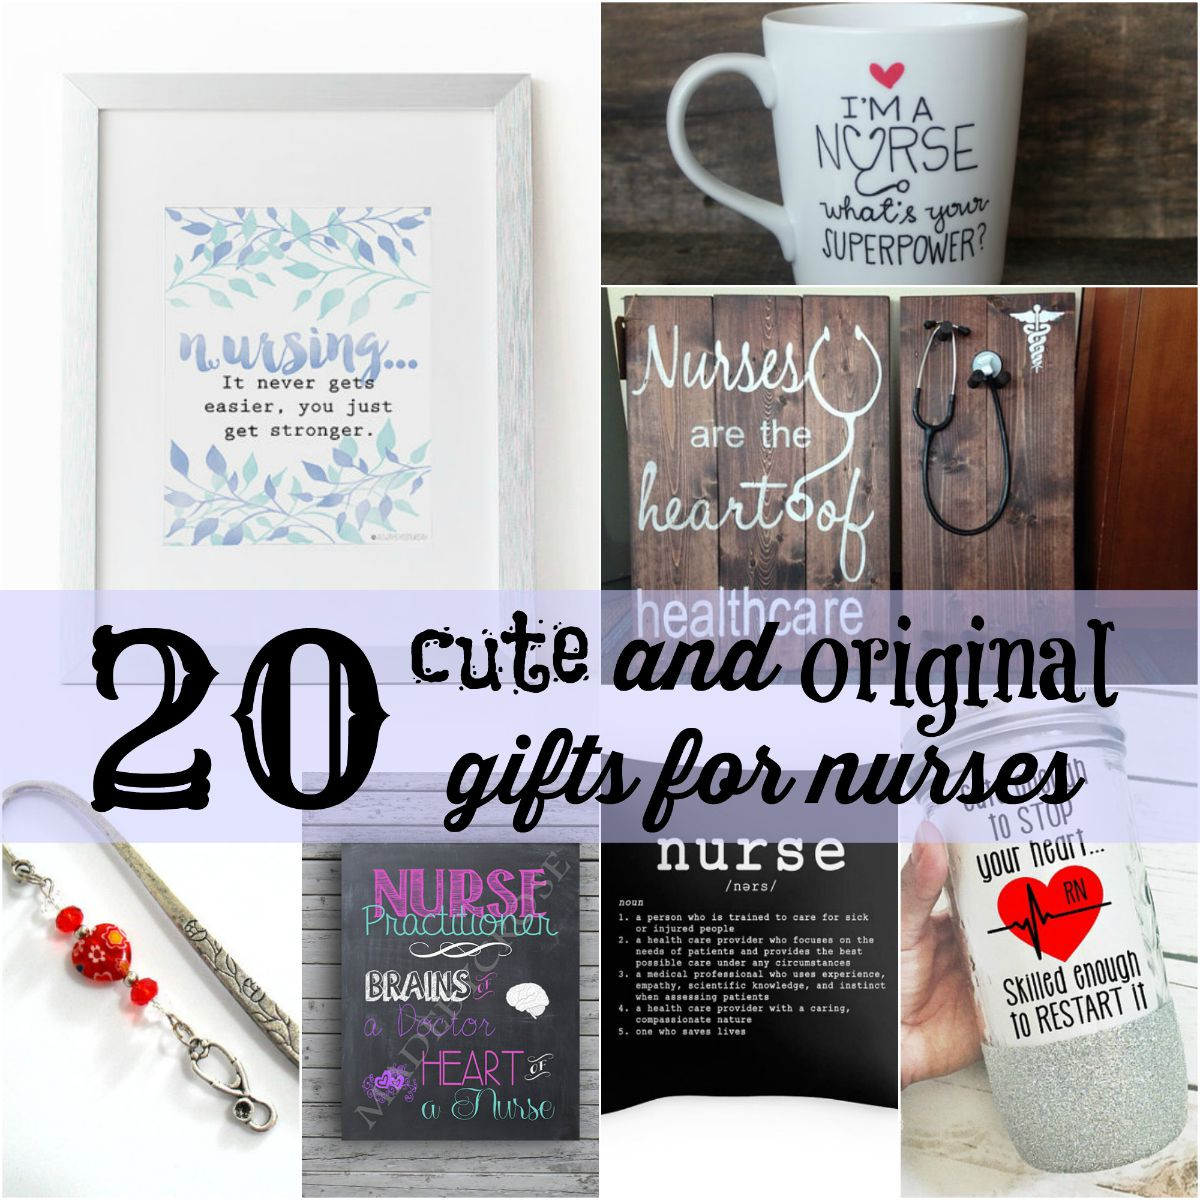 Nursing Graduation Gift Ideas
 20 Cute and Original Gifts for Nurses